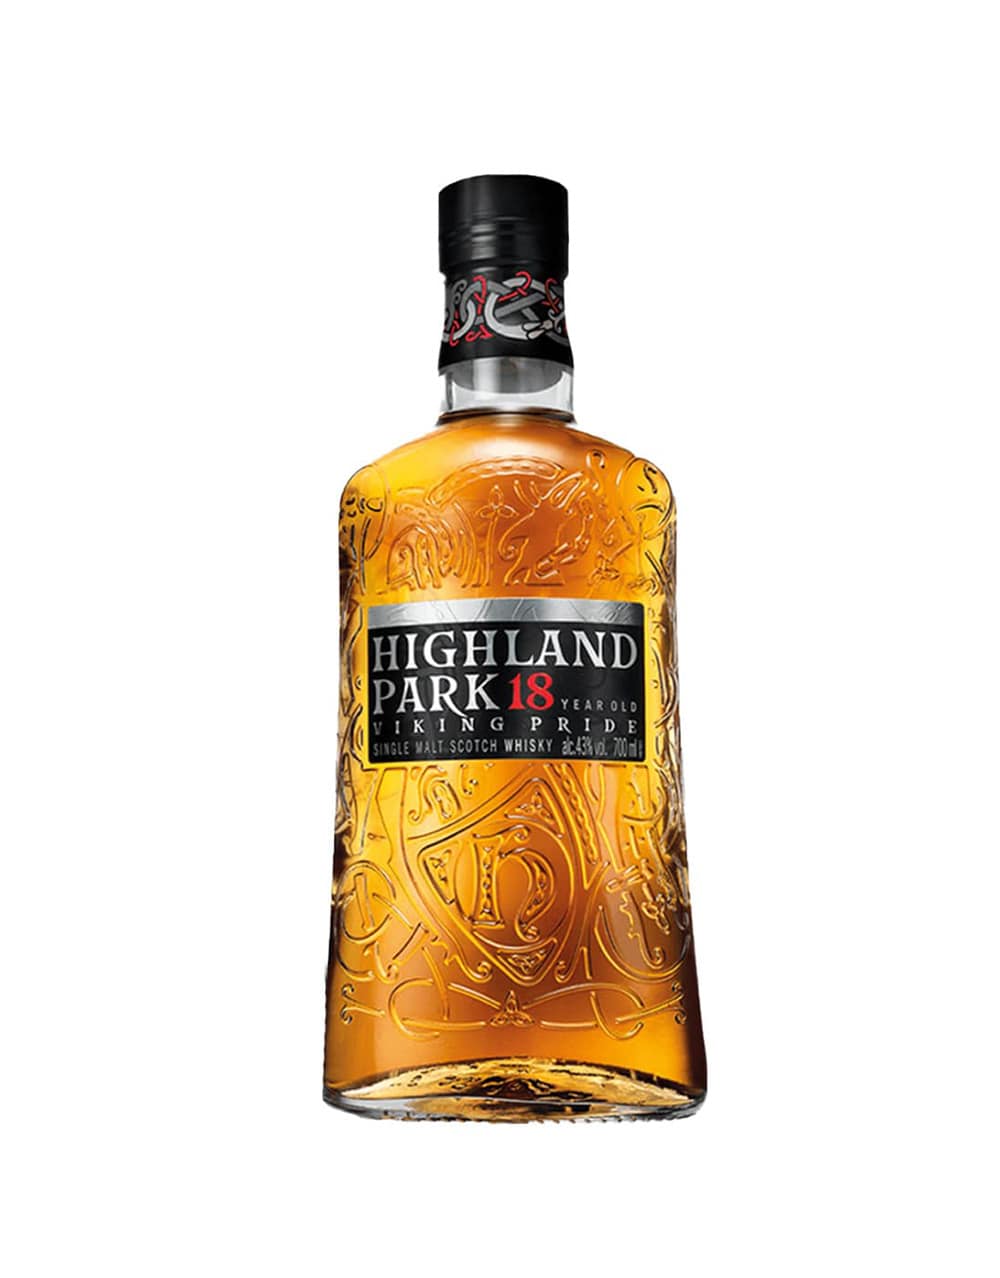 Highland Park 18 Year Old Scotch Whisky